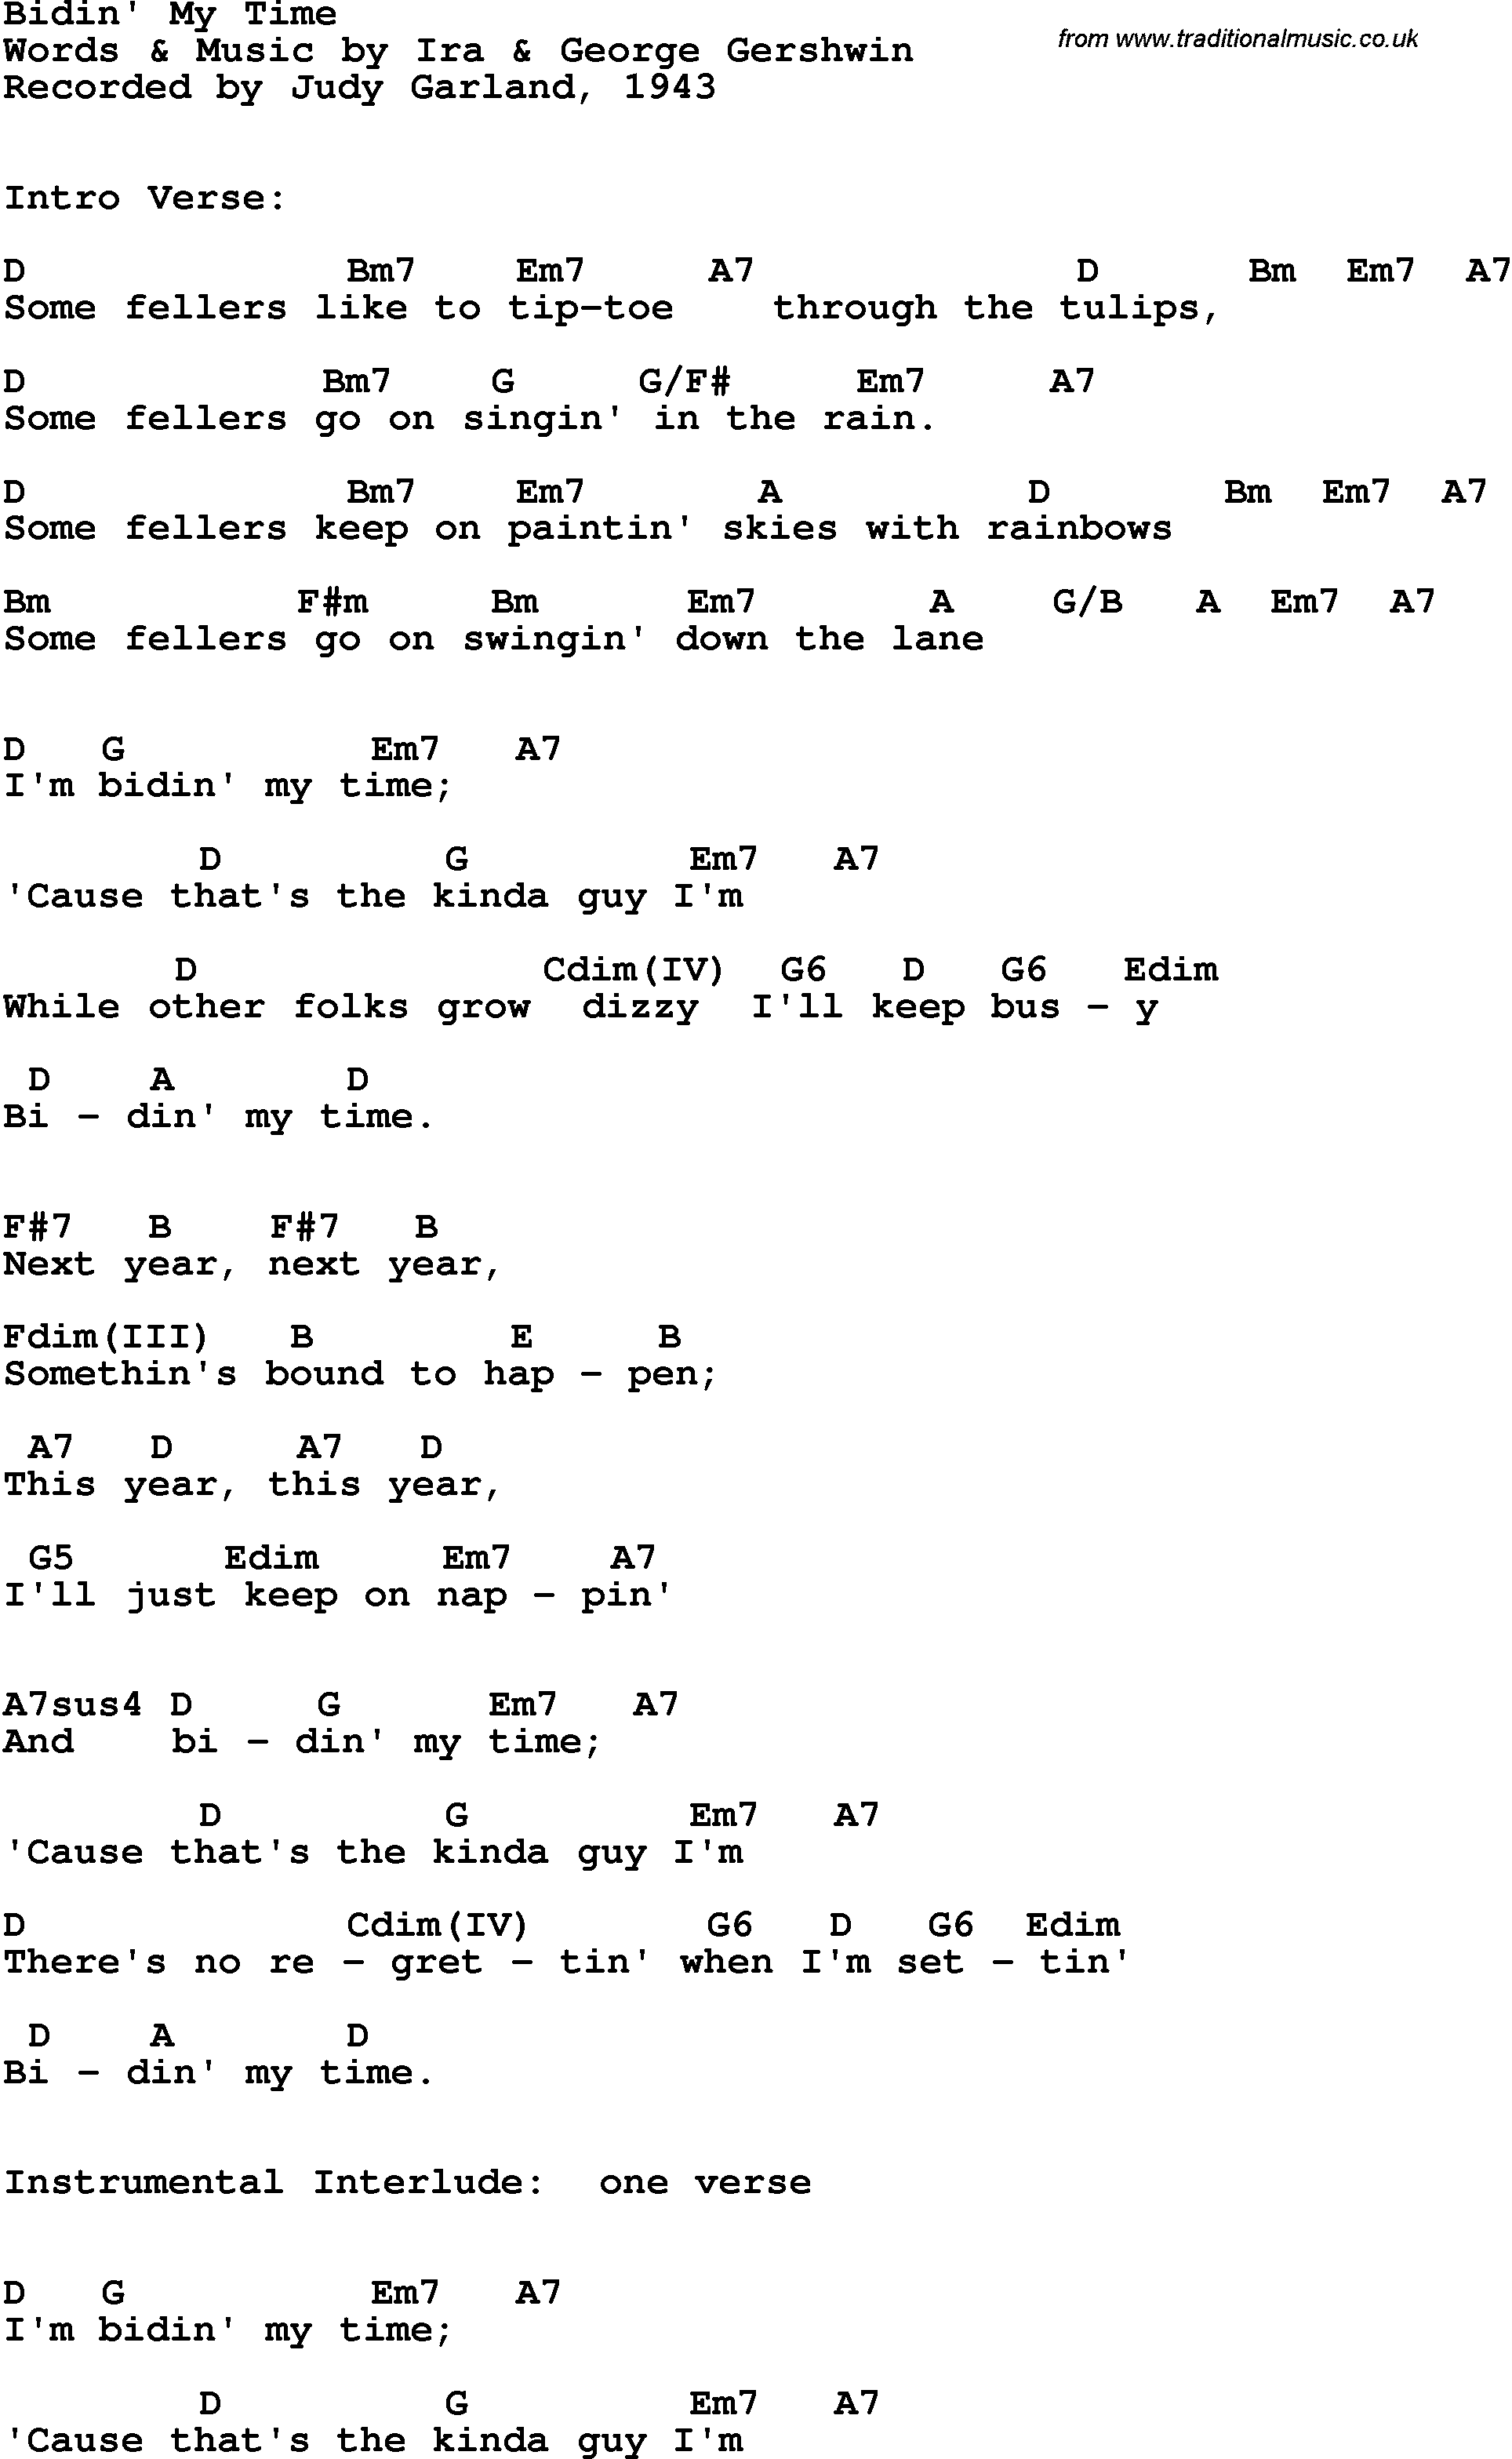 Song Lyrics with guitar chords for Bidin' My Time - Judy Garland, 1943